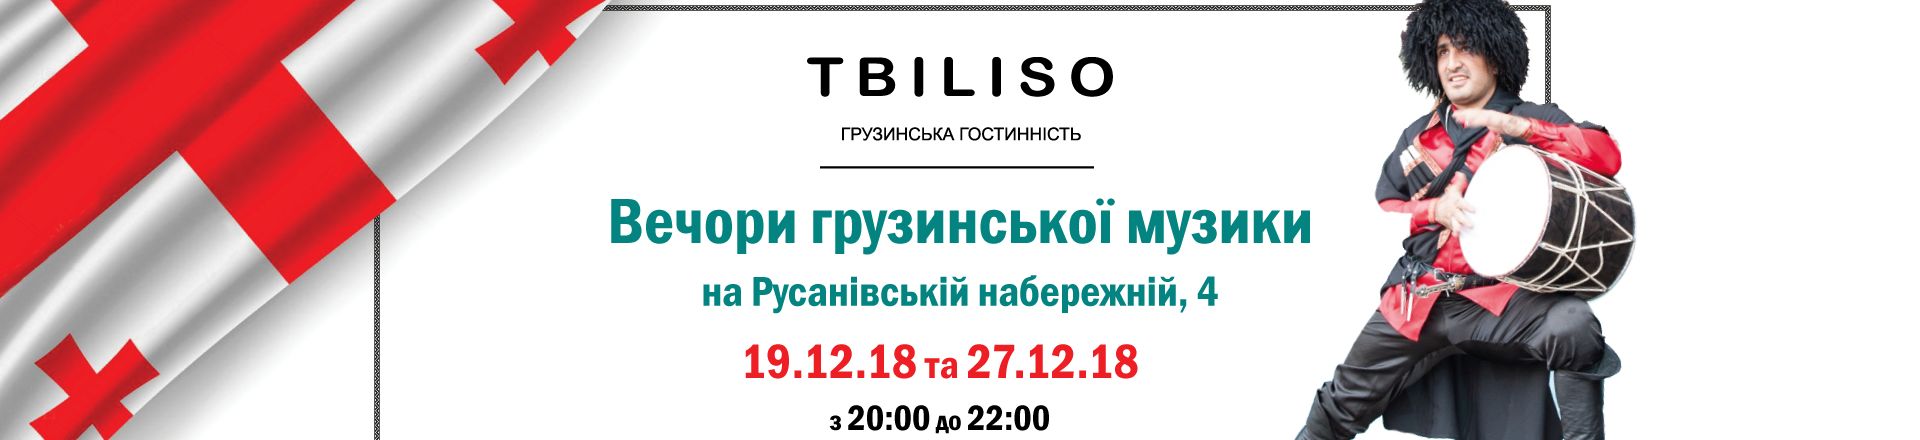 Вечори грузинської музики в Tbiliso!